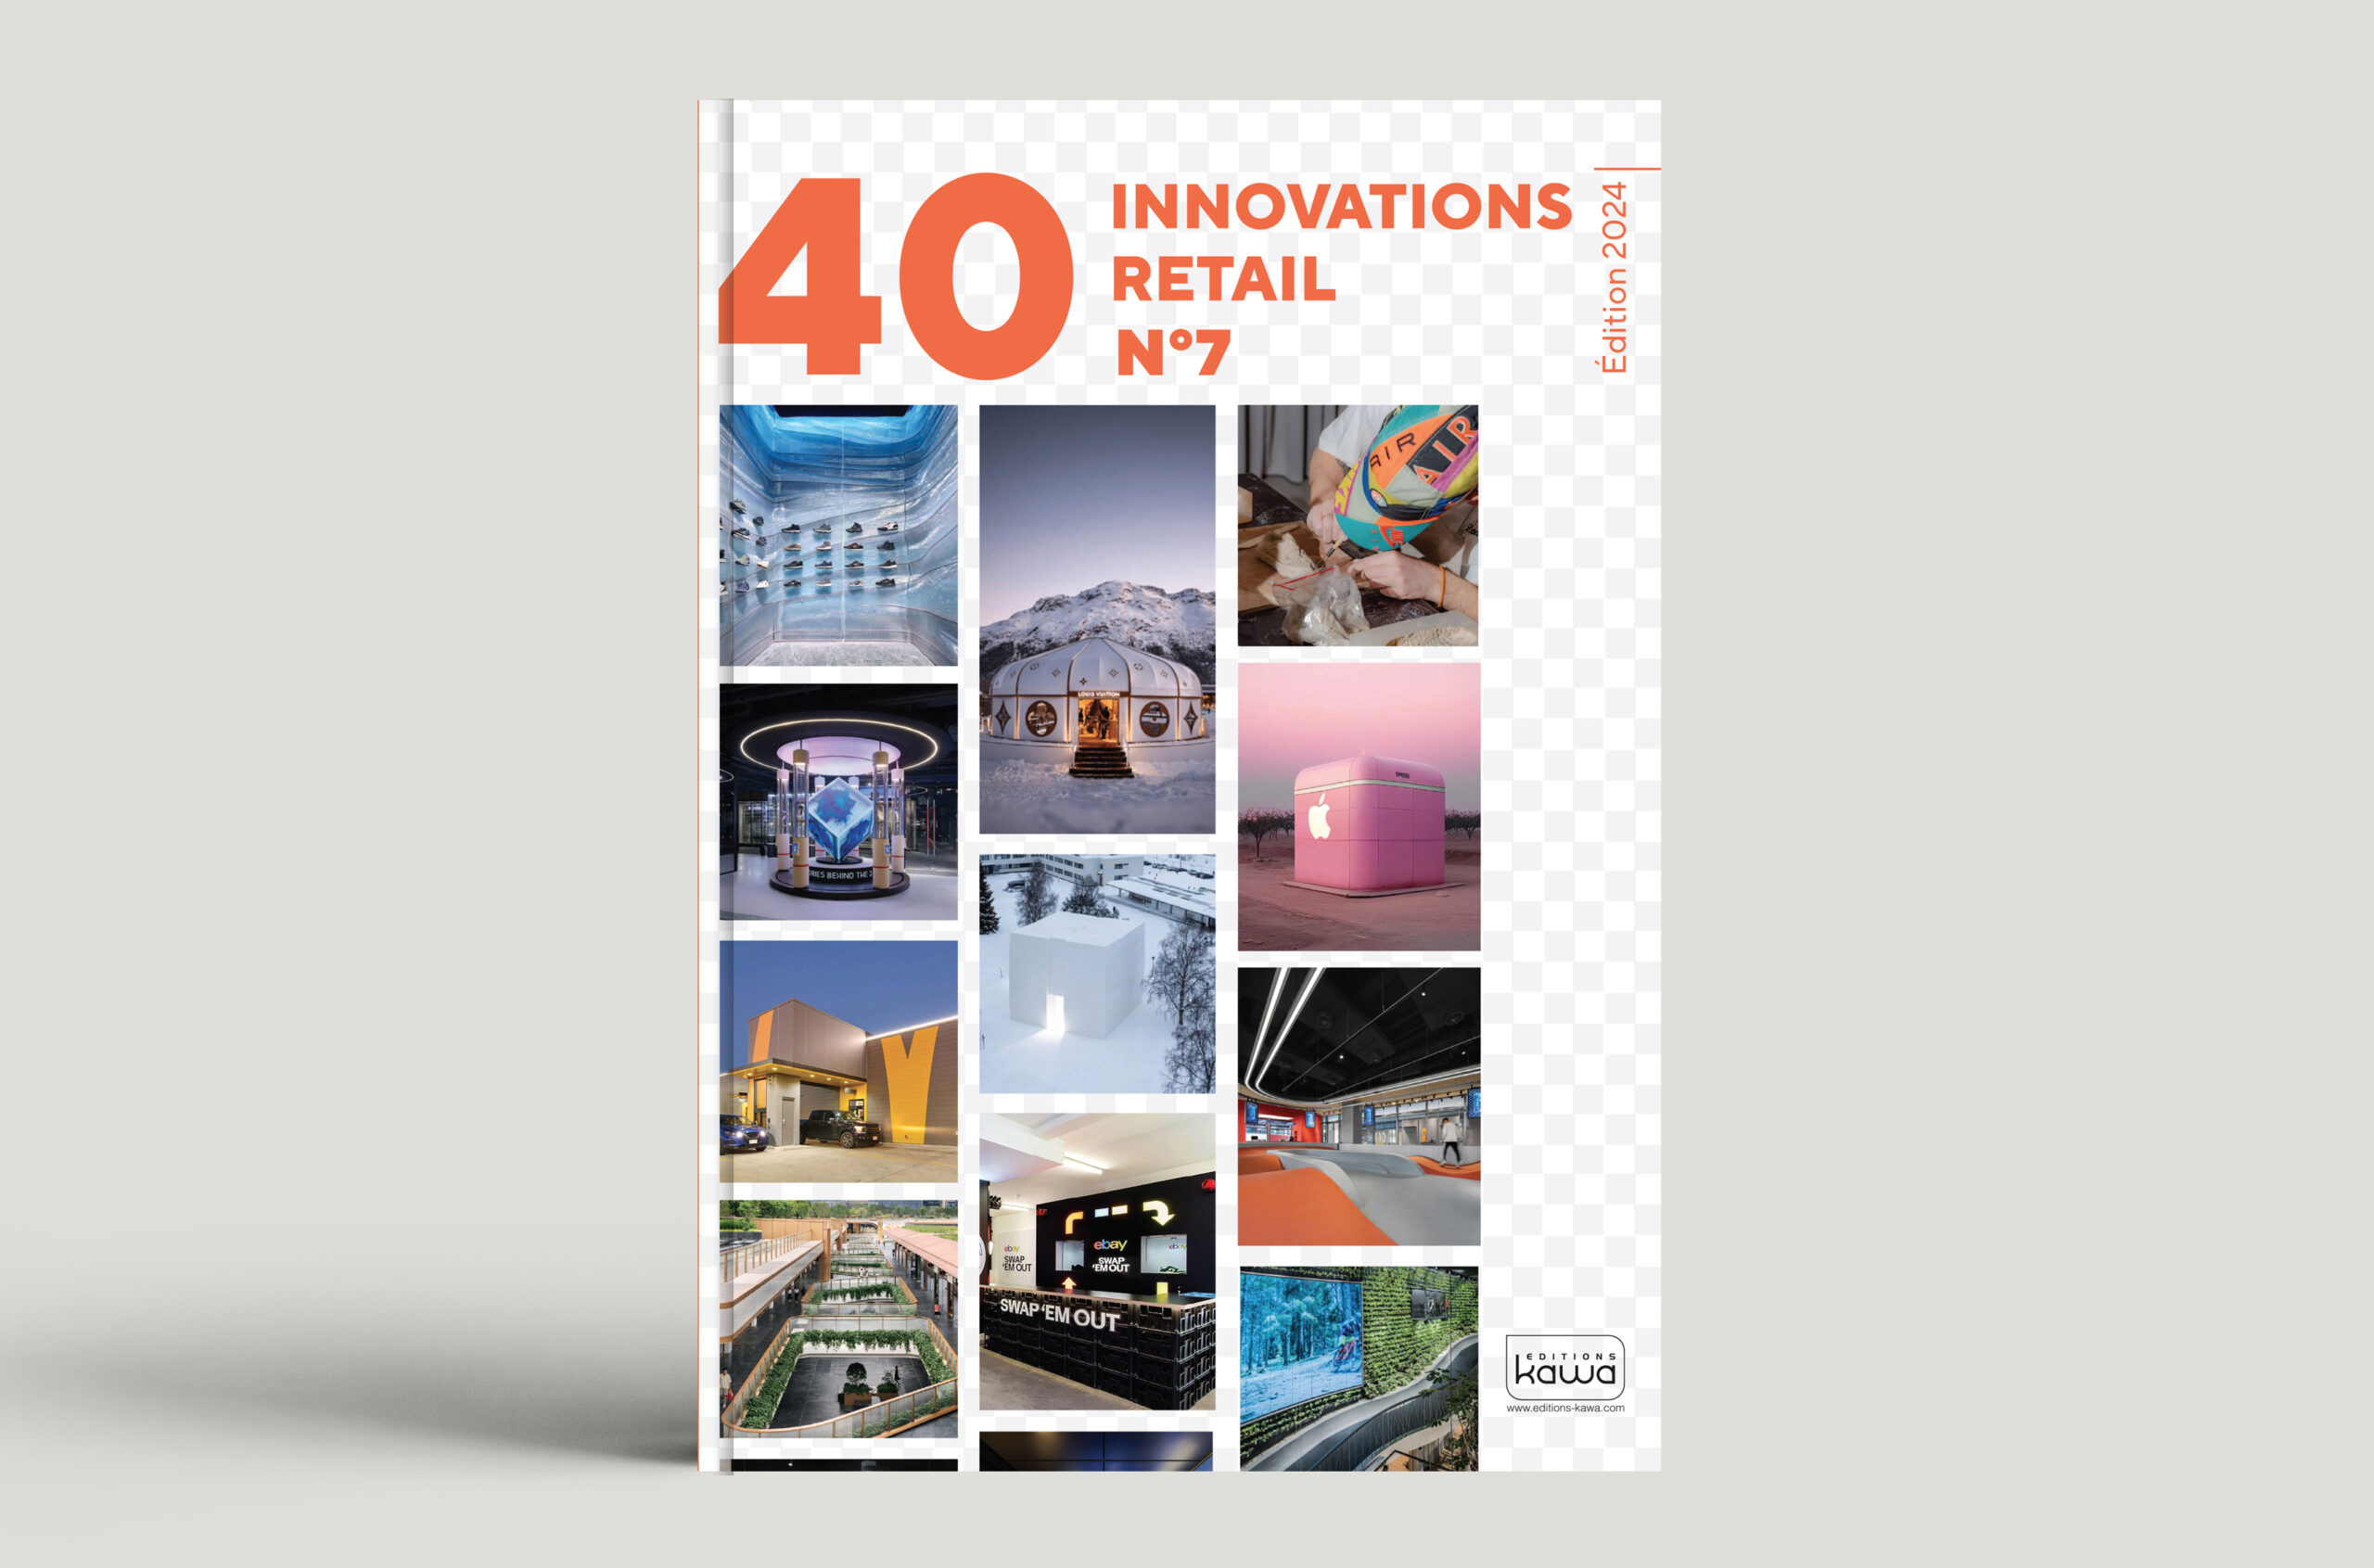 40 retail innovations n°7